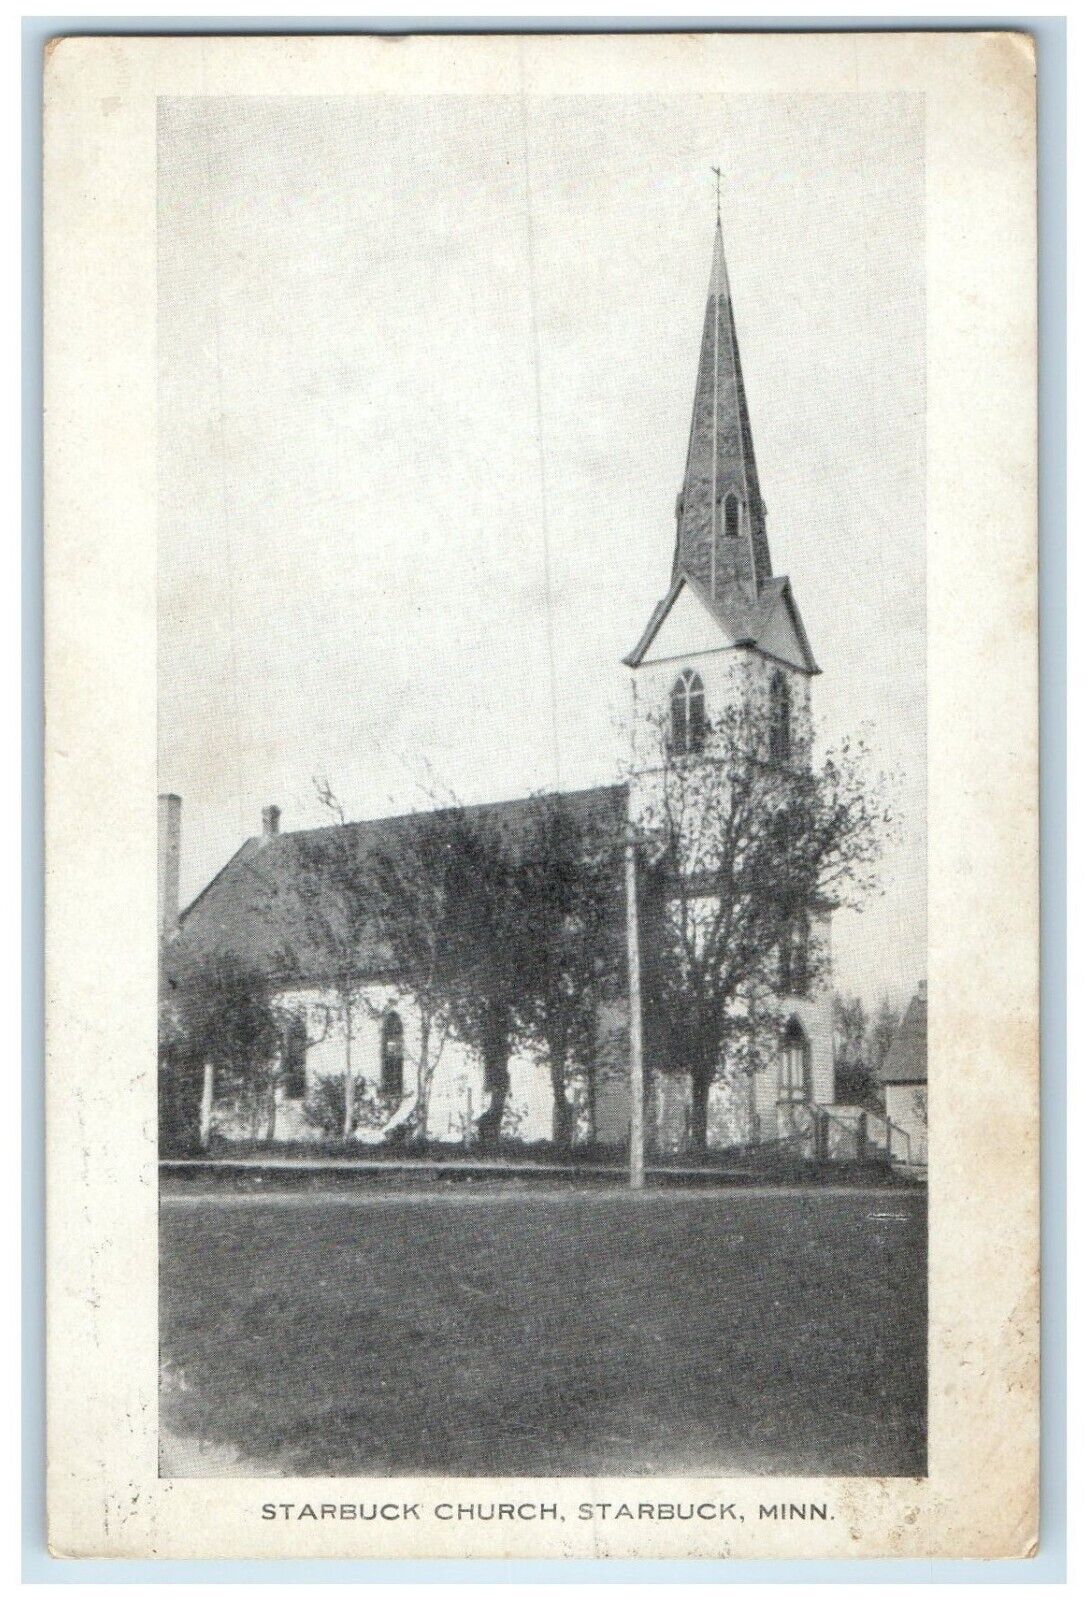 1911 Starbuck Church Chapel Exterior View Building Starbuck Minnesota Postcard